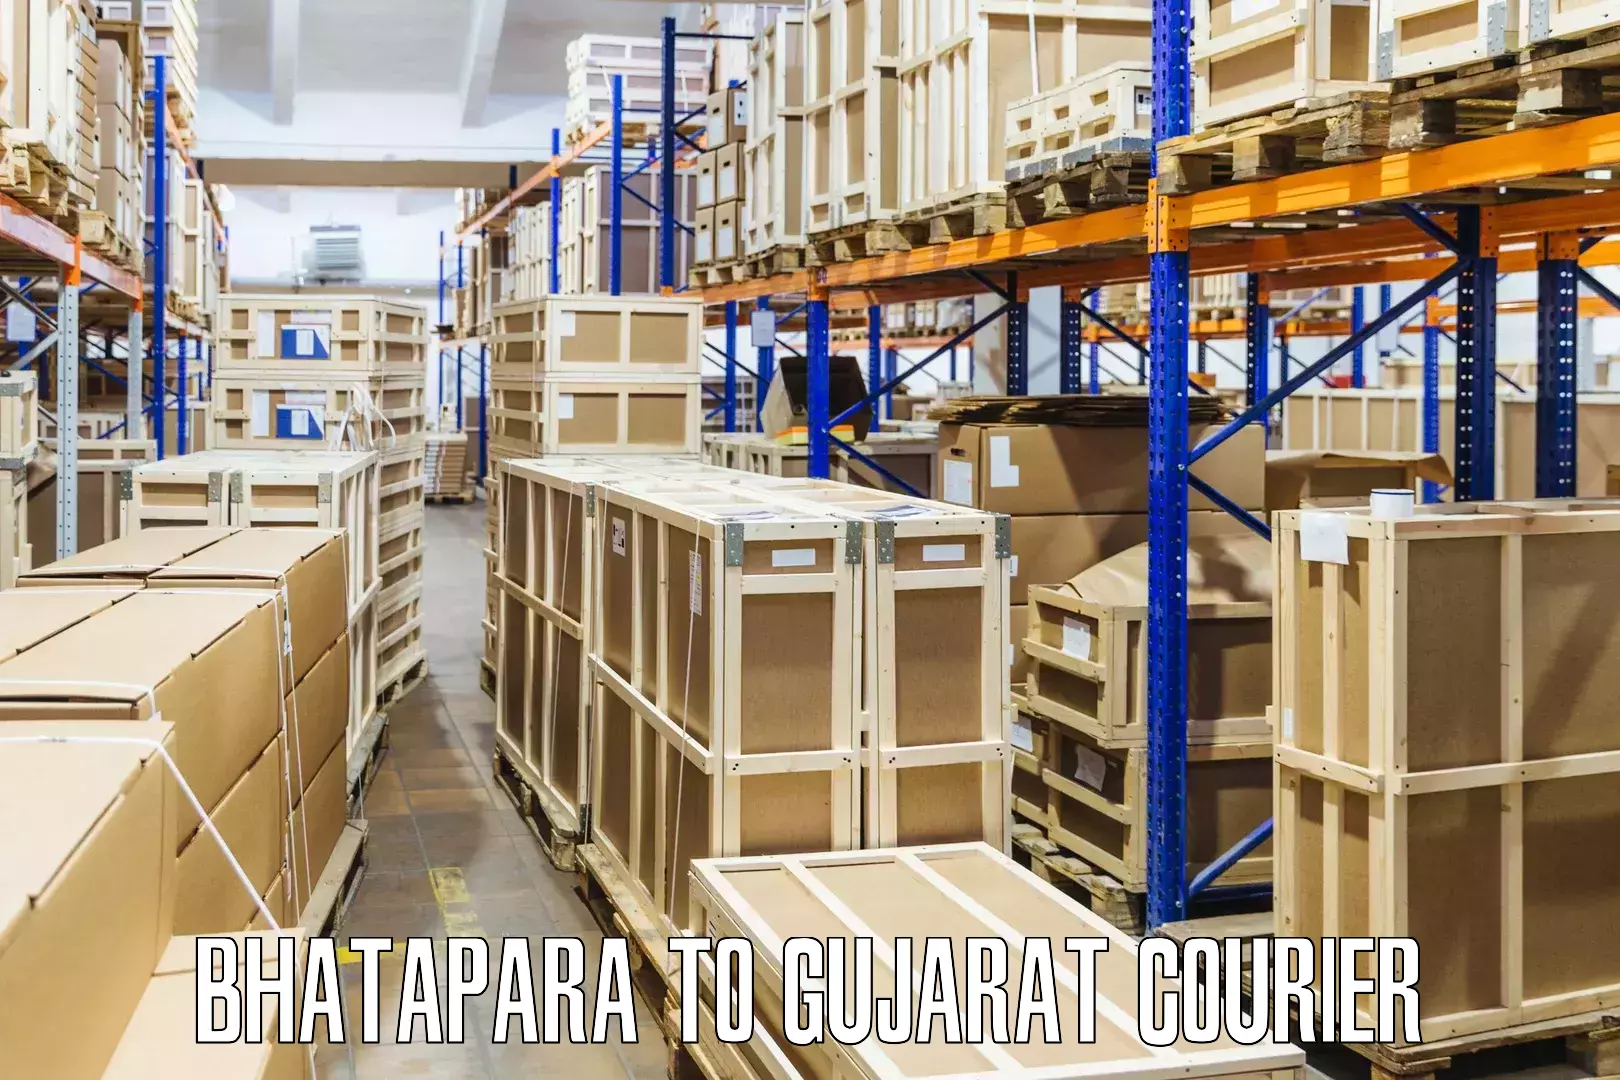 Lightweight parcel options Bhatapara to Mundra